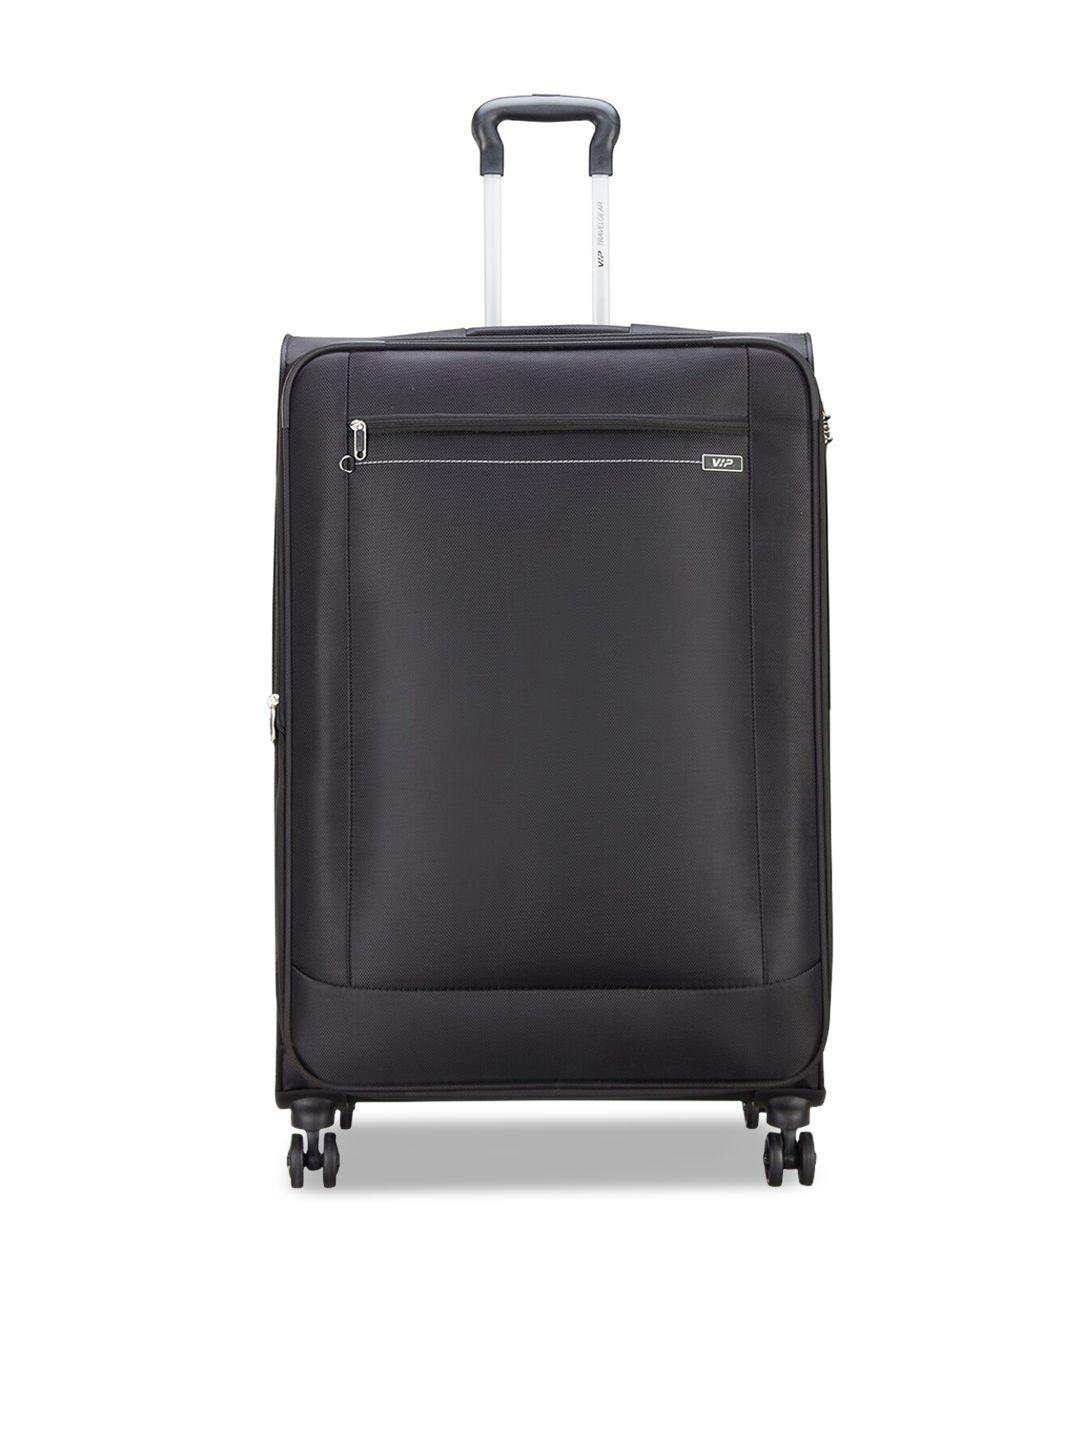 vip medium trolley suitcase